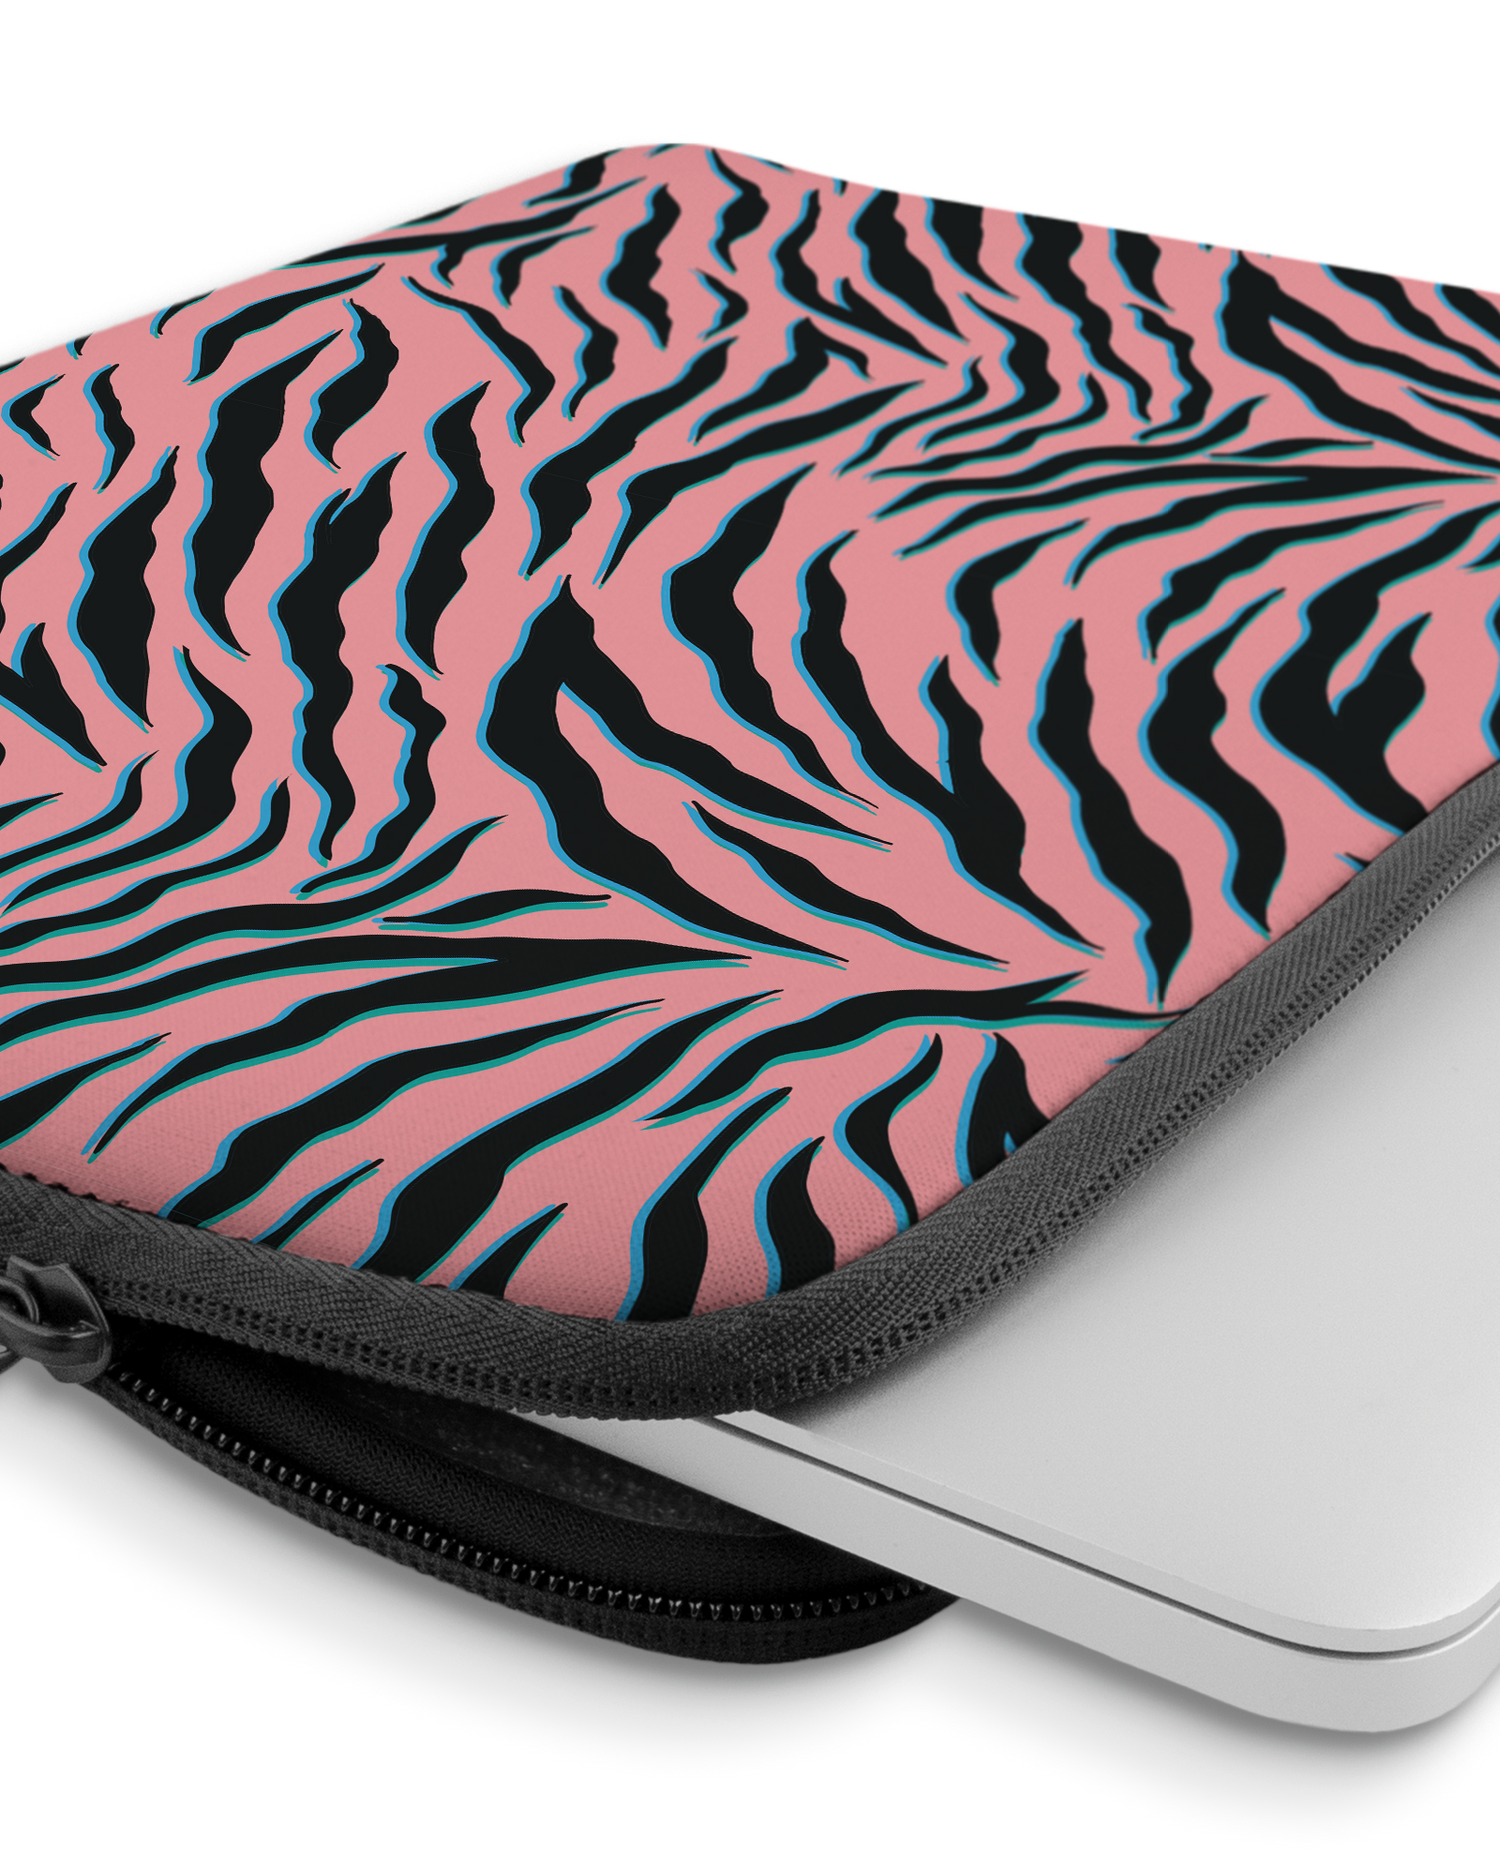 Pink Zebra Laptophülle 13-14 Zoll mit Gerät im Inneren